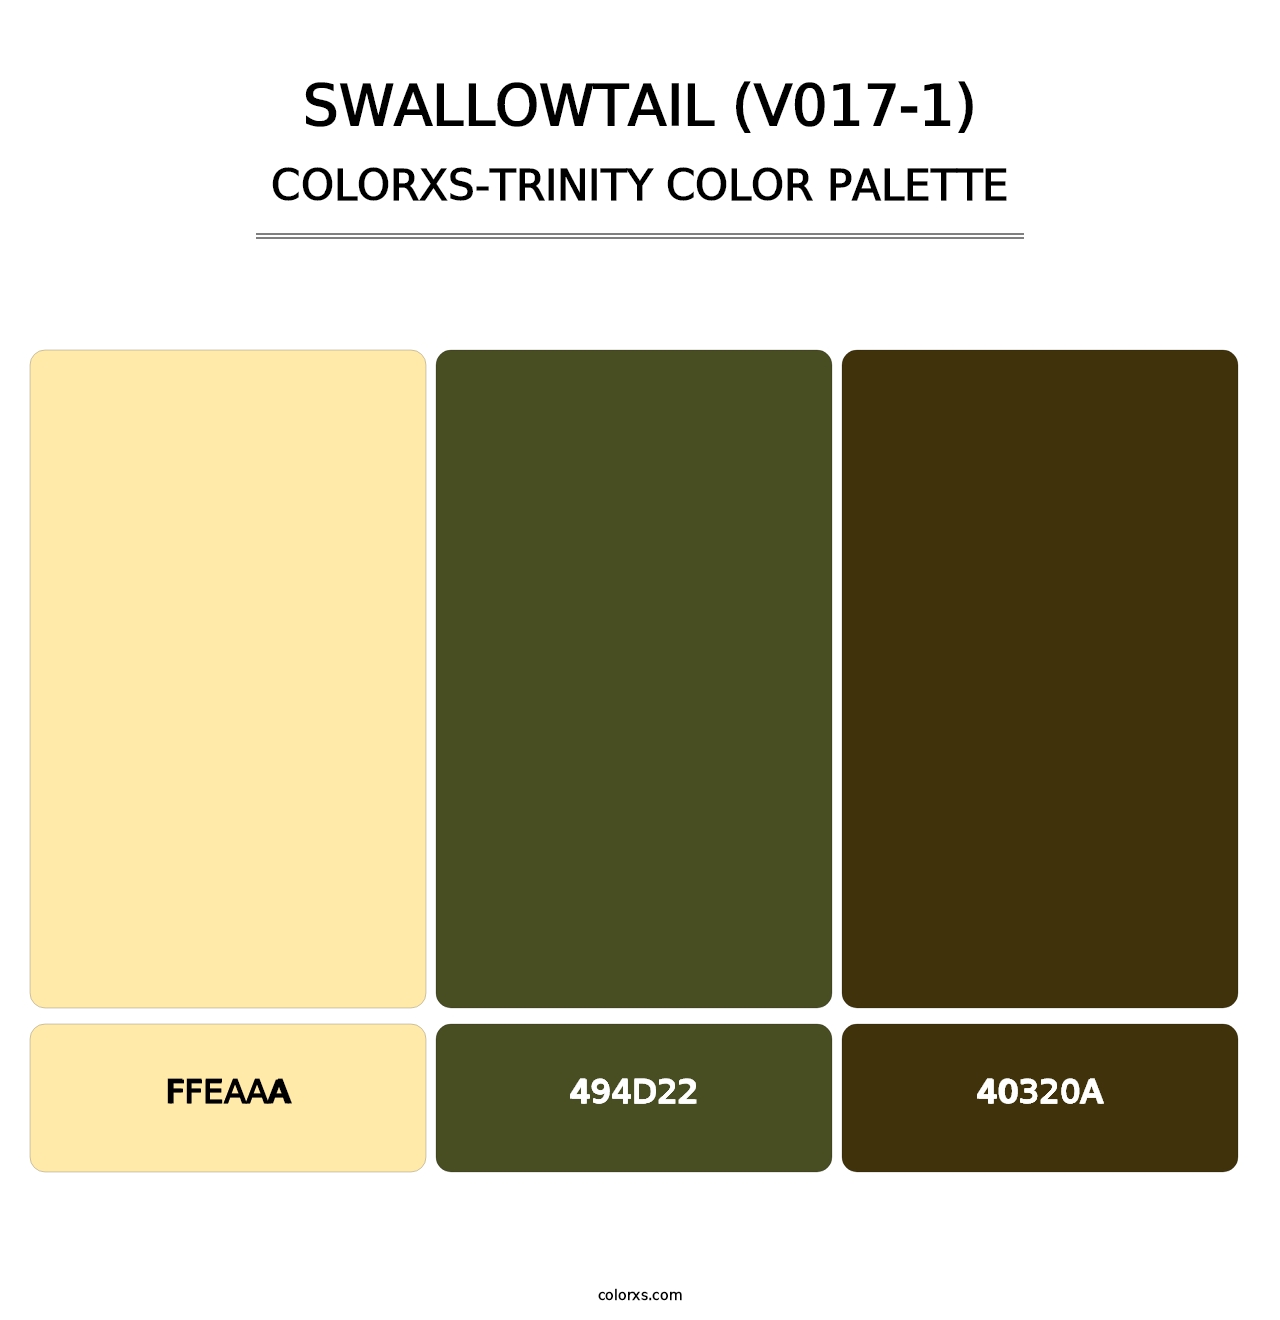 Swallowtail (V017-1) - Colorxs Trinity Palette